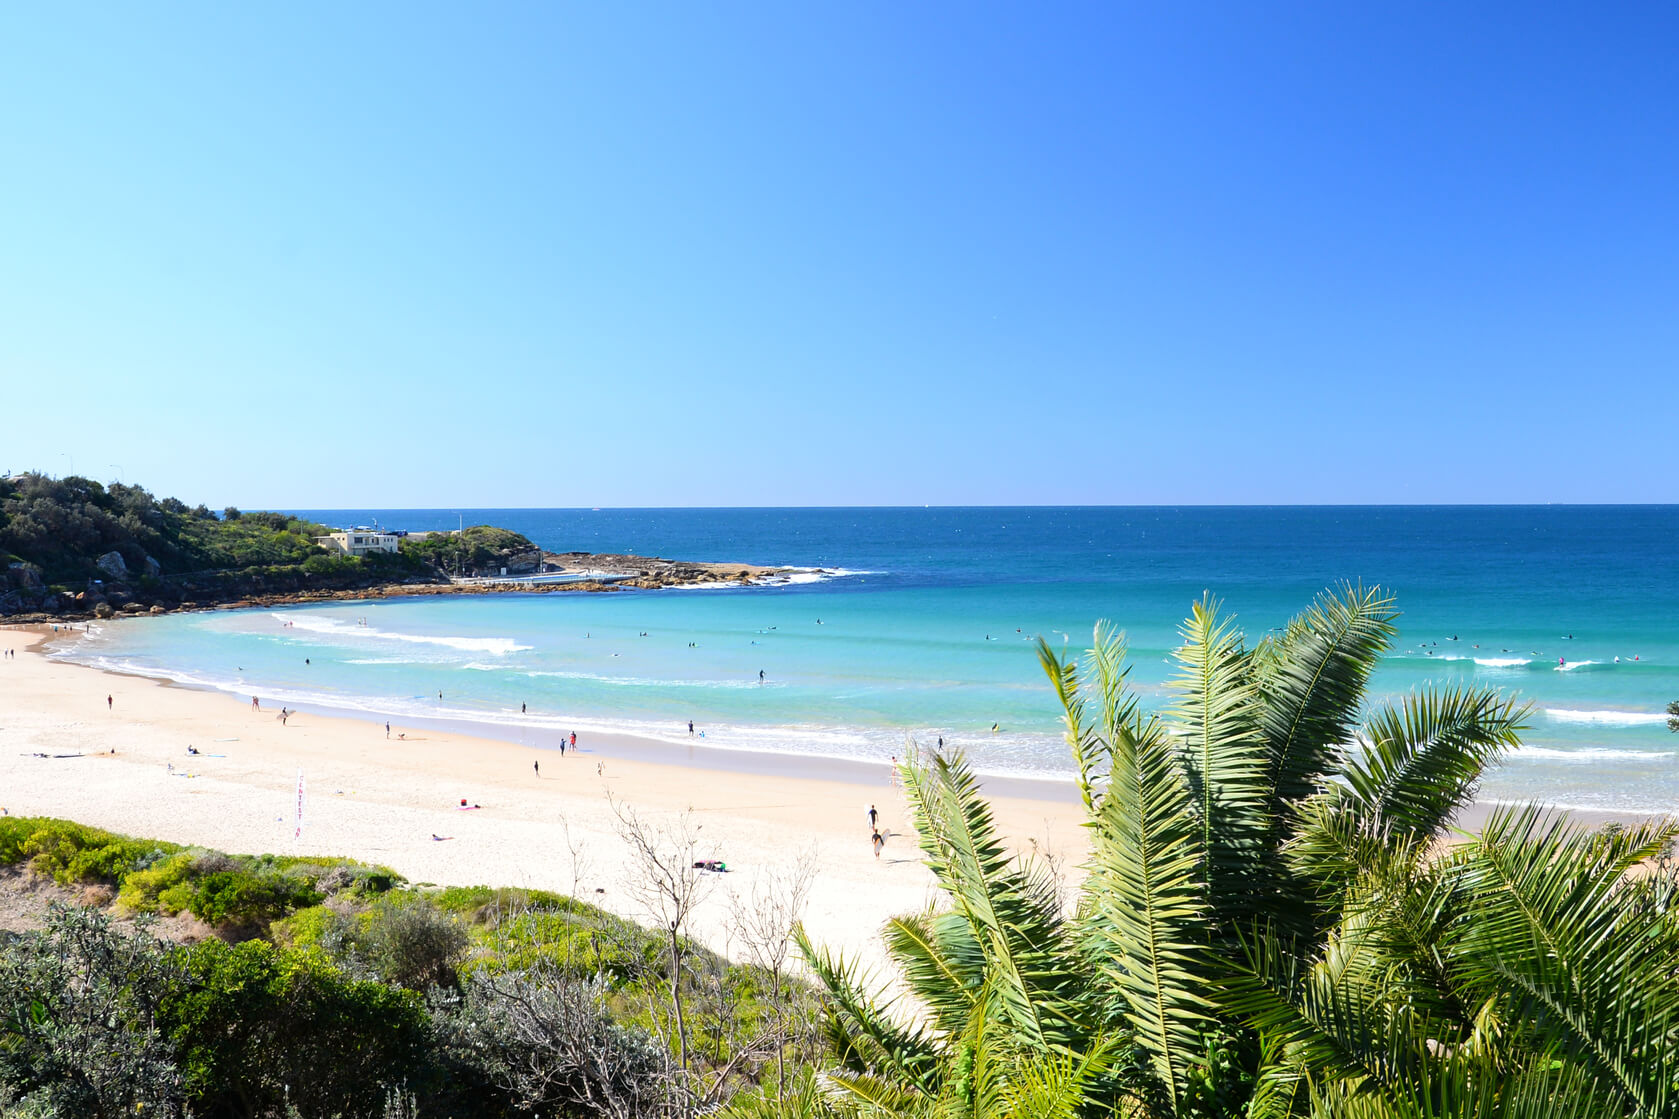 The Sydney coastline showcases a clean and clear beach.